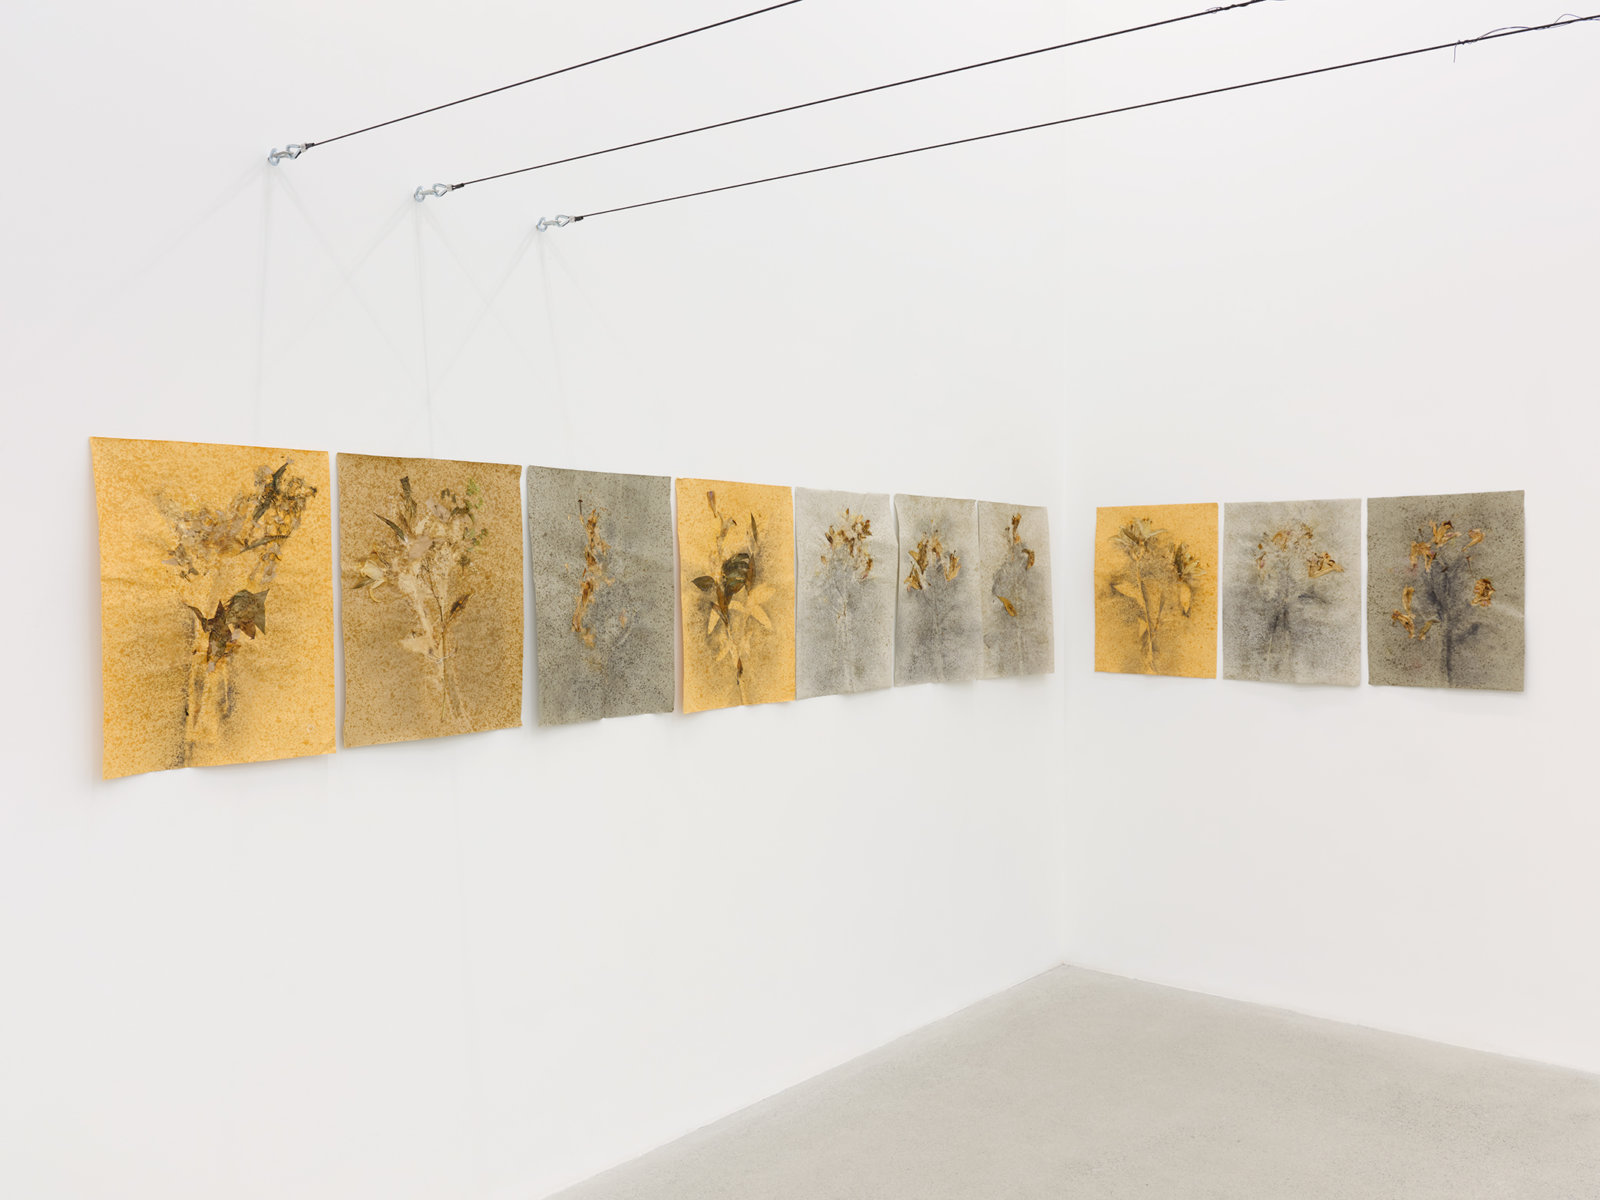 Rochelle Goldberg, Bouquet, insufficient, 2021, pressed flower, graphite, pastel, bronze dust, shellac, on paper, 196 x 19 in. (498 x 47 cm)